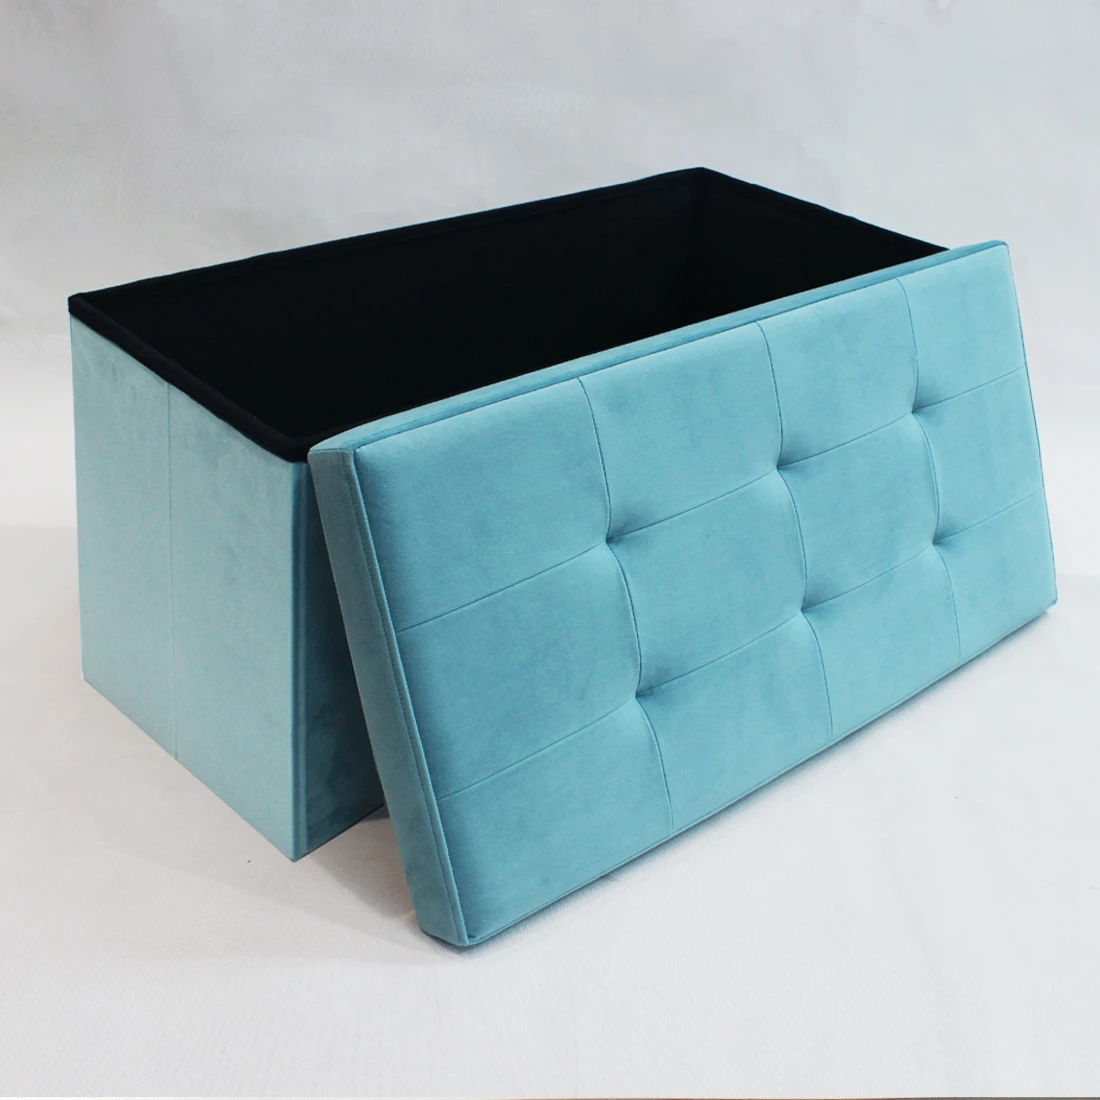 Reatai handmade velvet fabric ottoman bench box foldable storage box bench ottoman